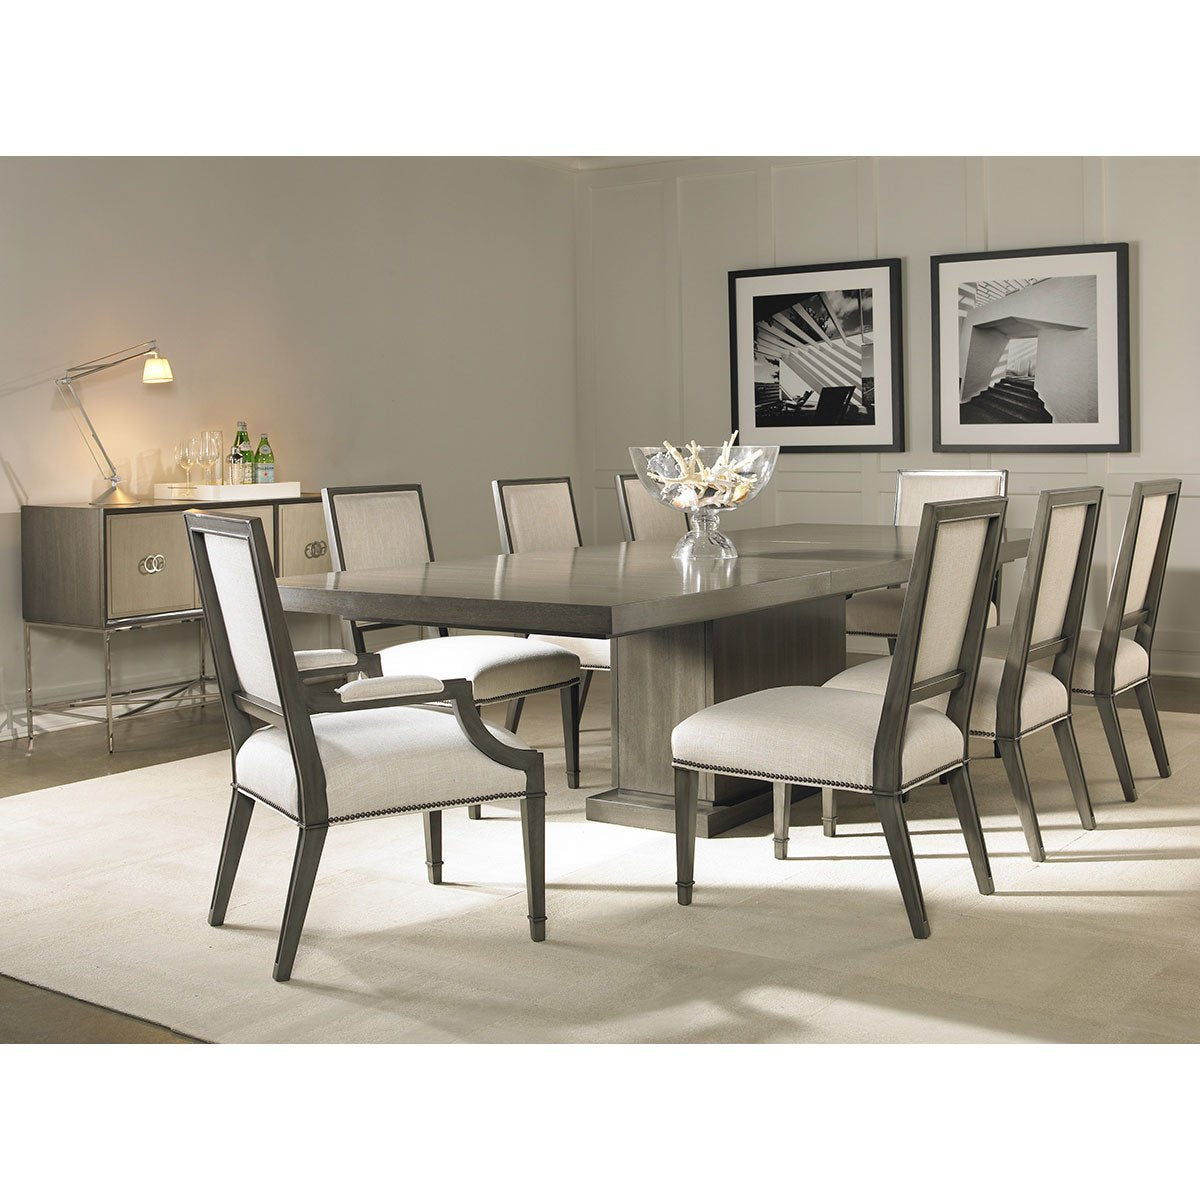 Vanguard Furniture Bradford Dining Table